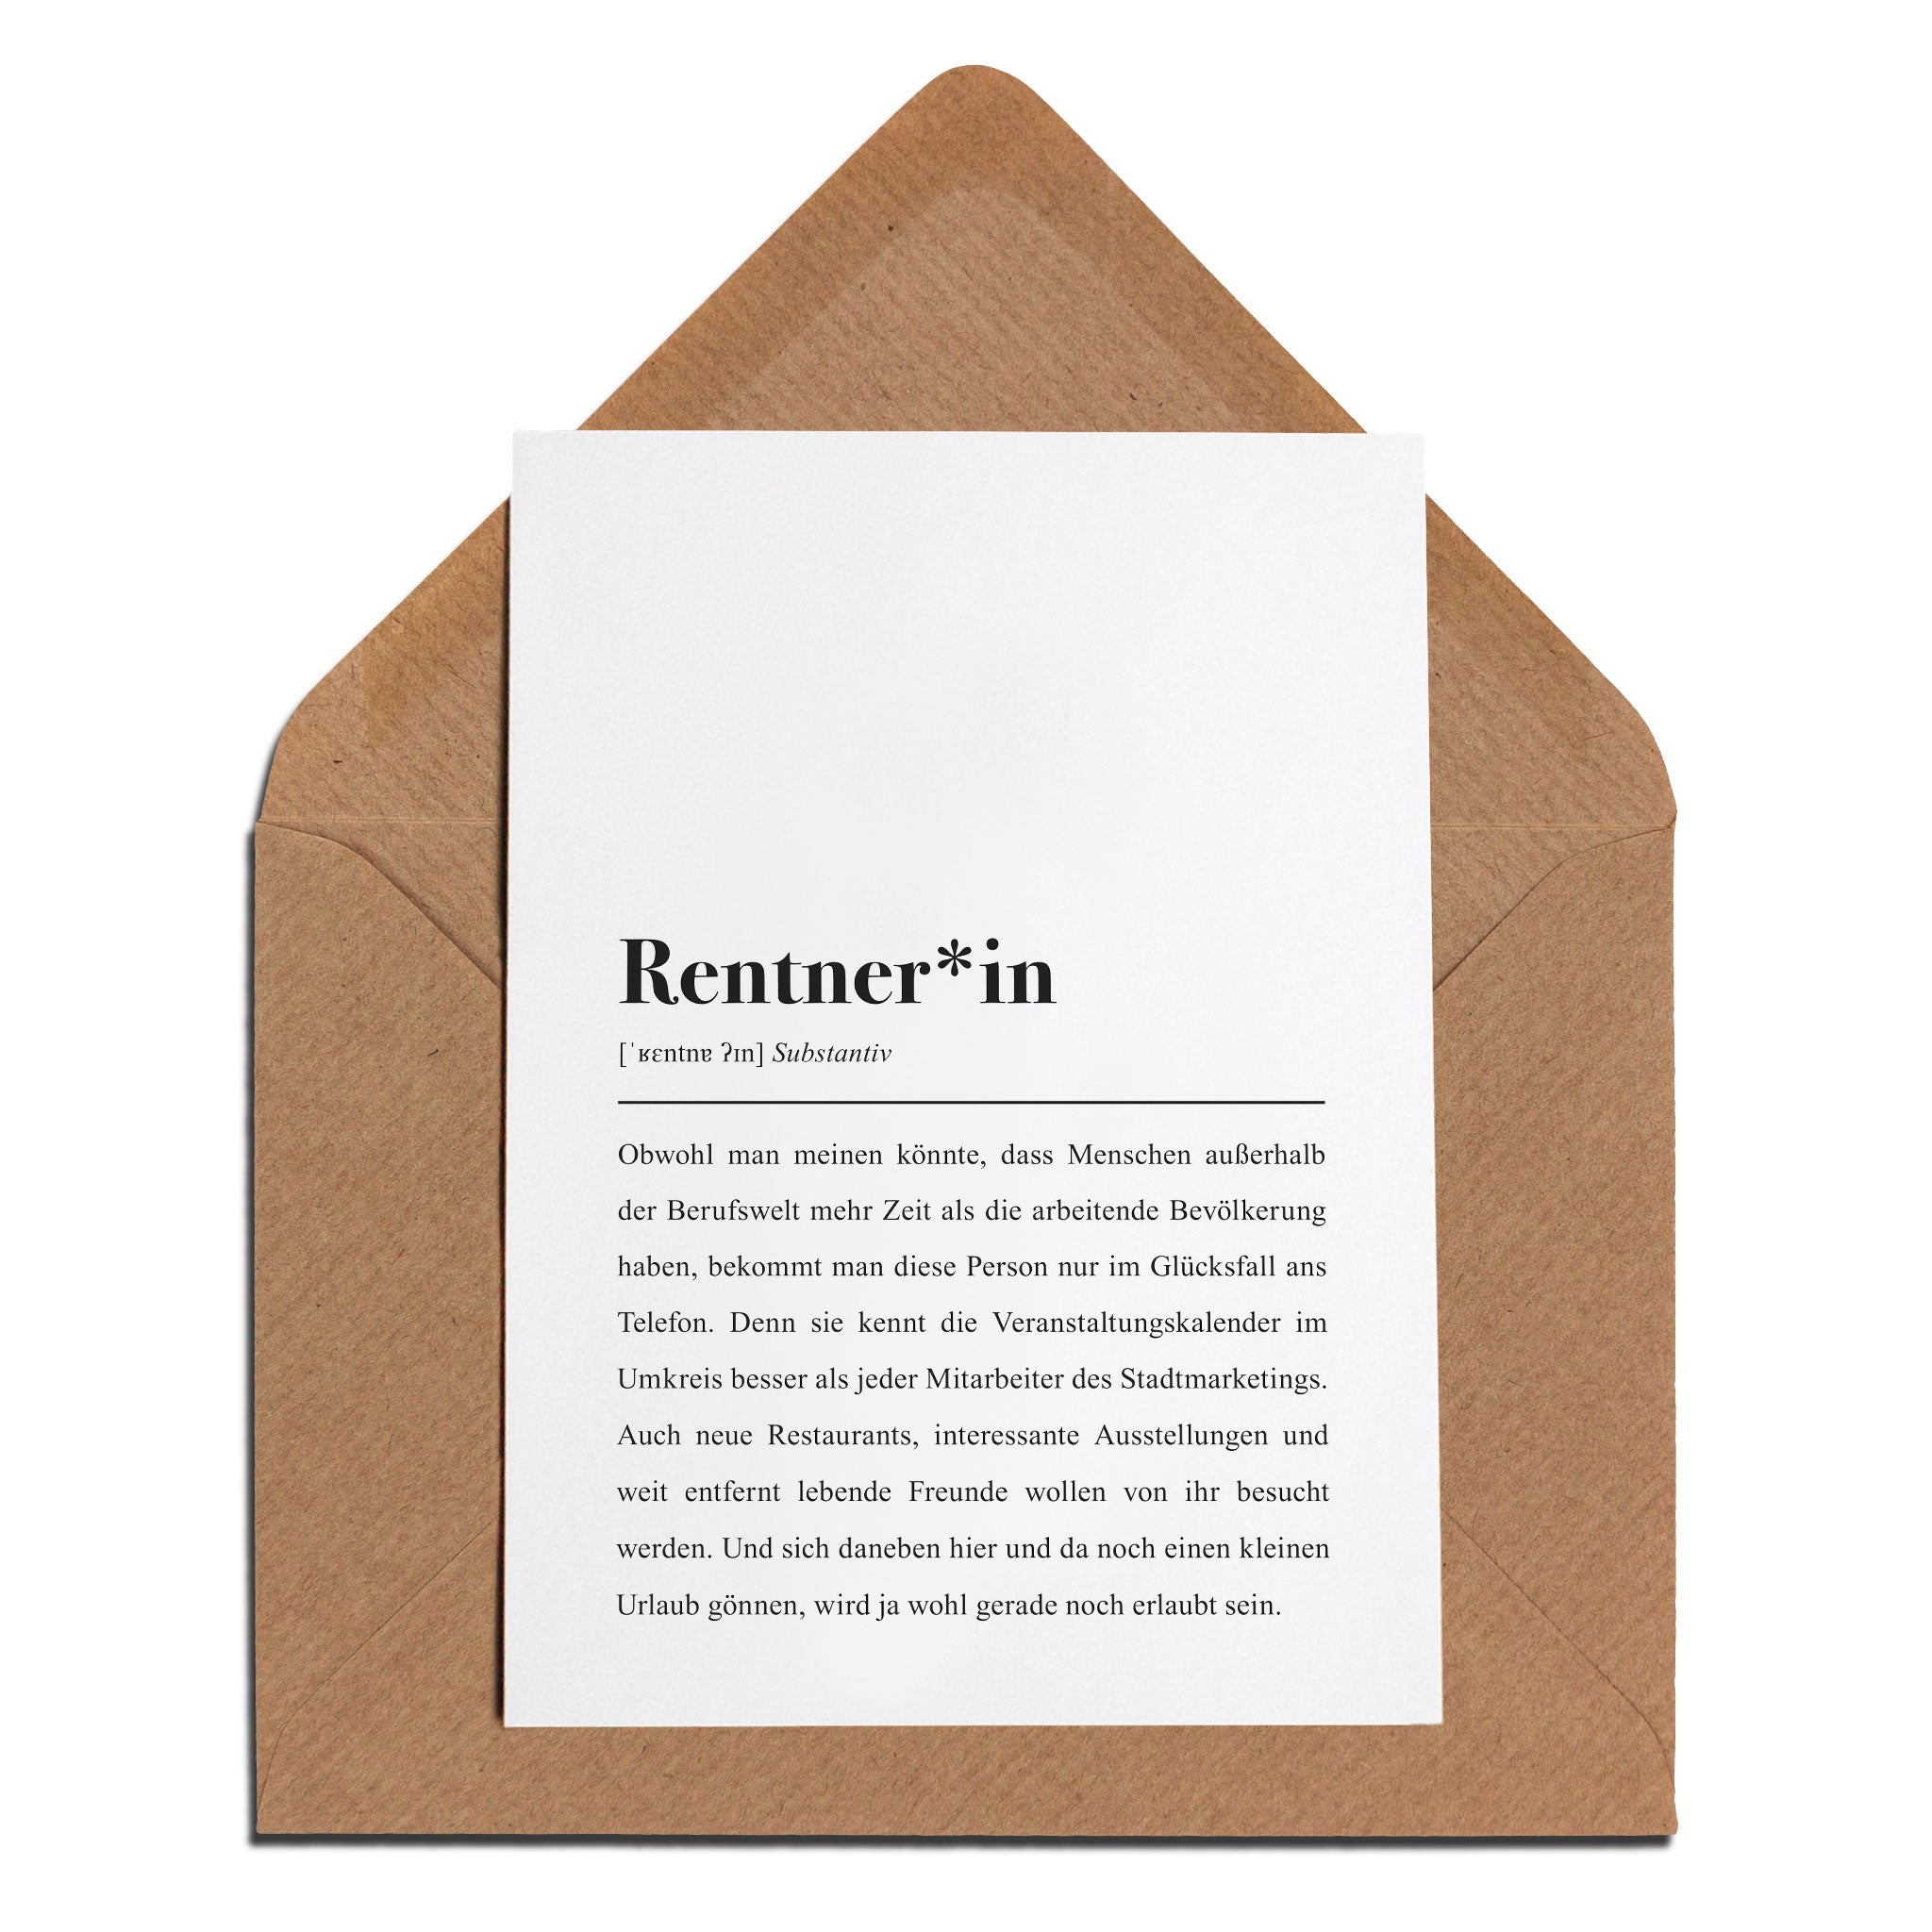 Rentner*in Definition: Grußkarte mit Umschlag